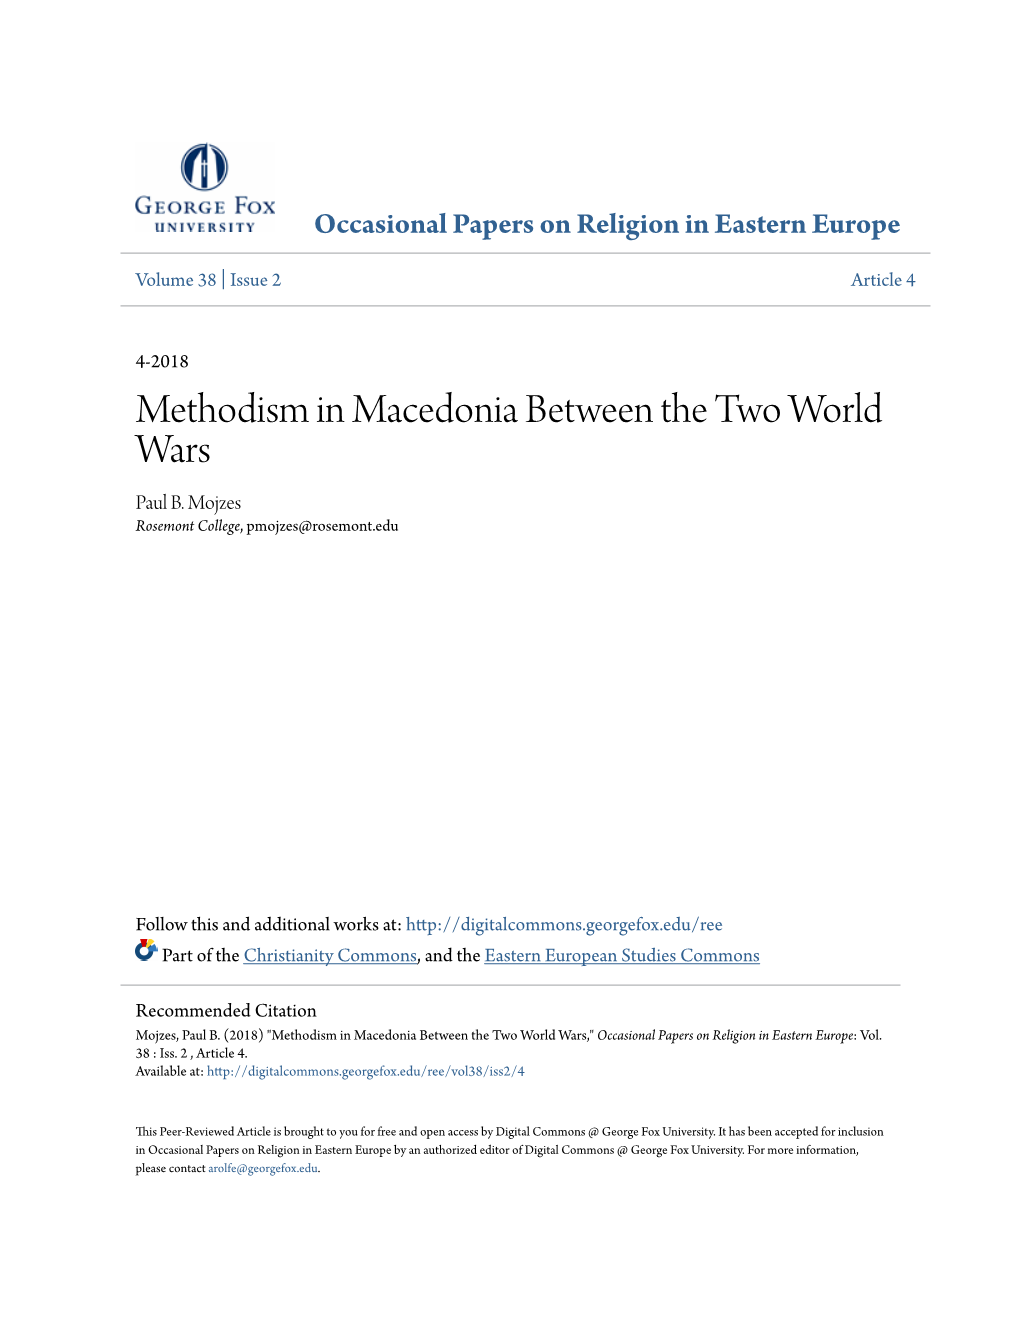 Methodism in Macedonia Between the Two World Wars Paul B